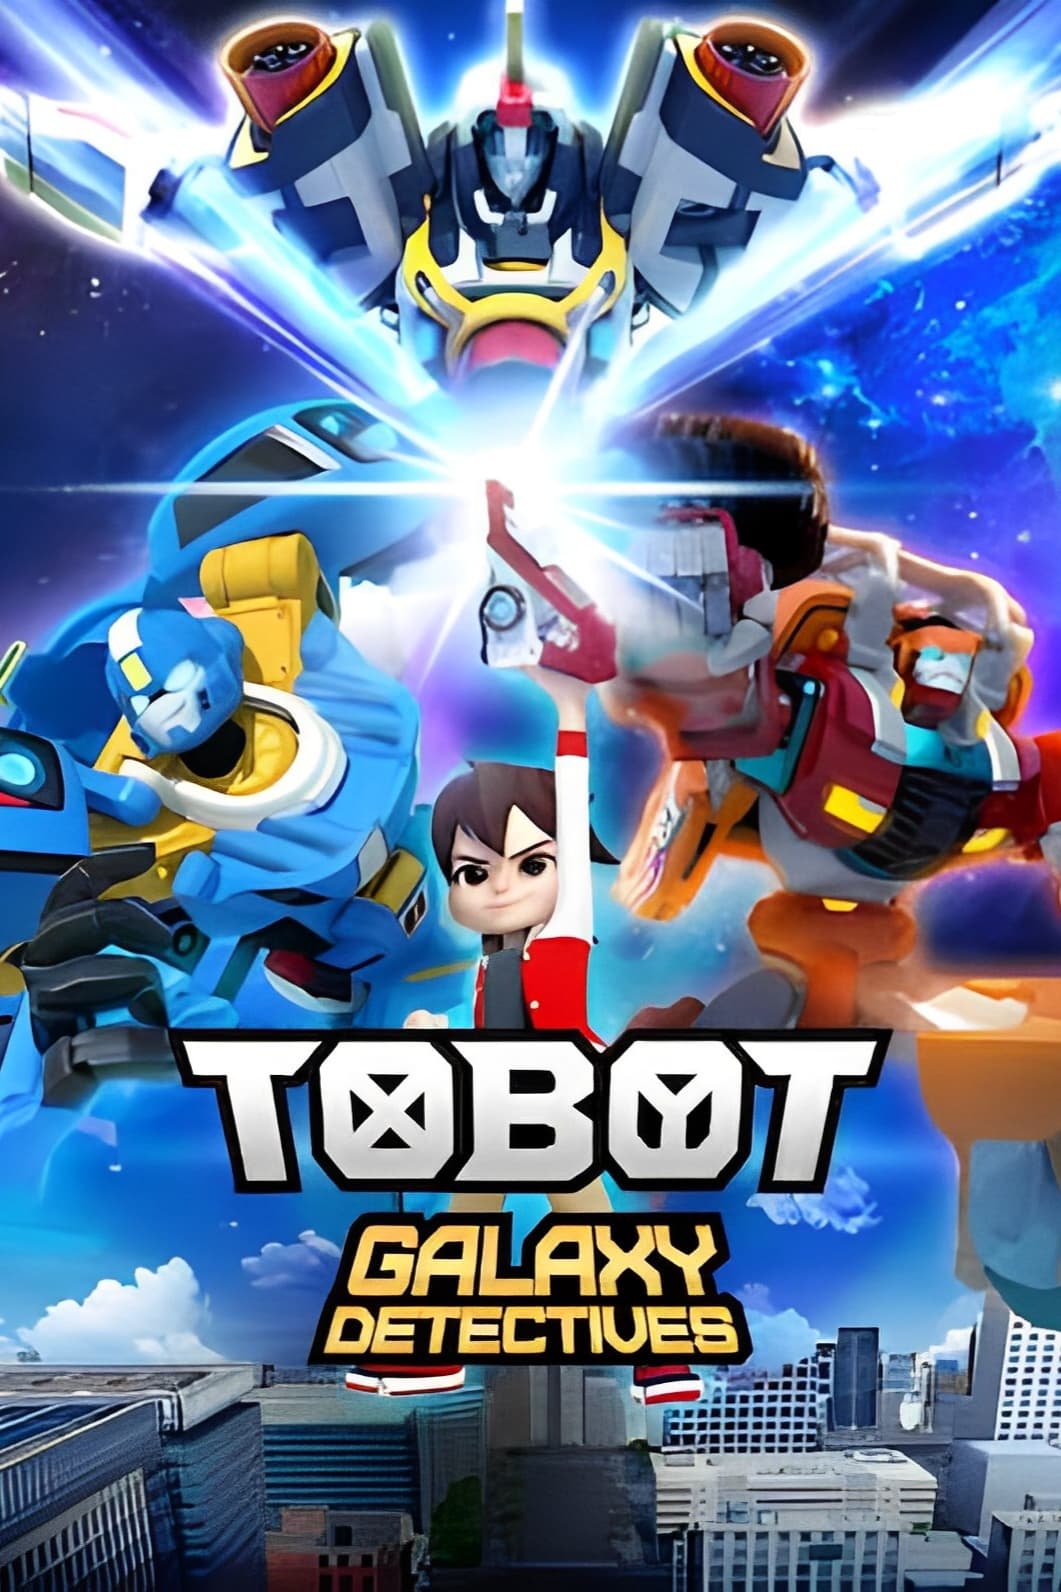 Tobot Galaxy Detectives